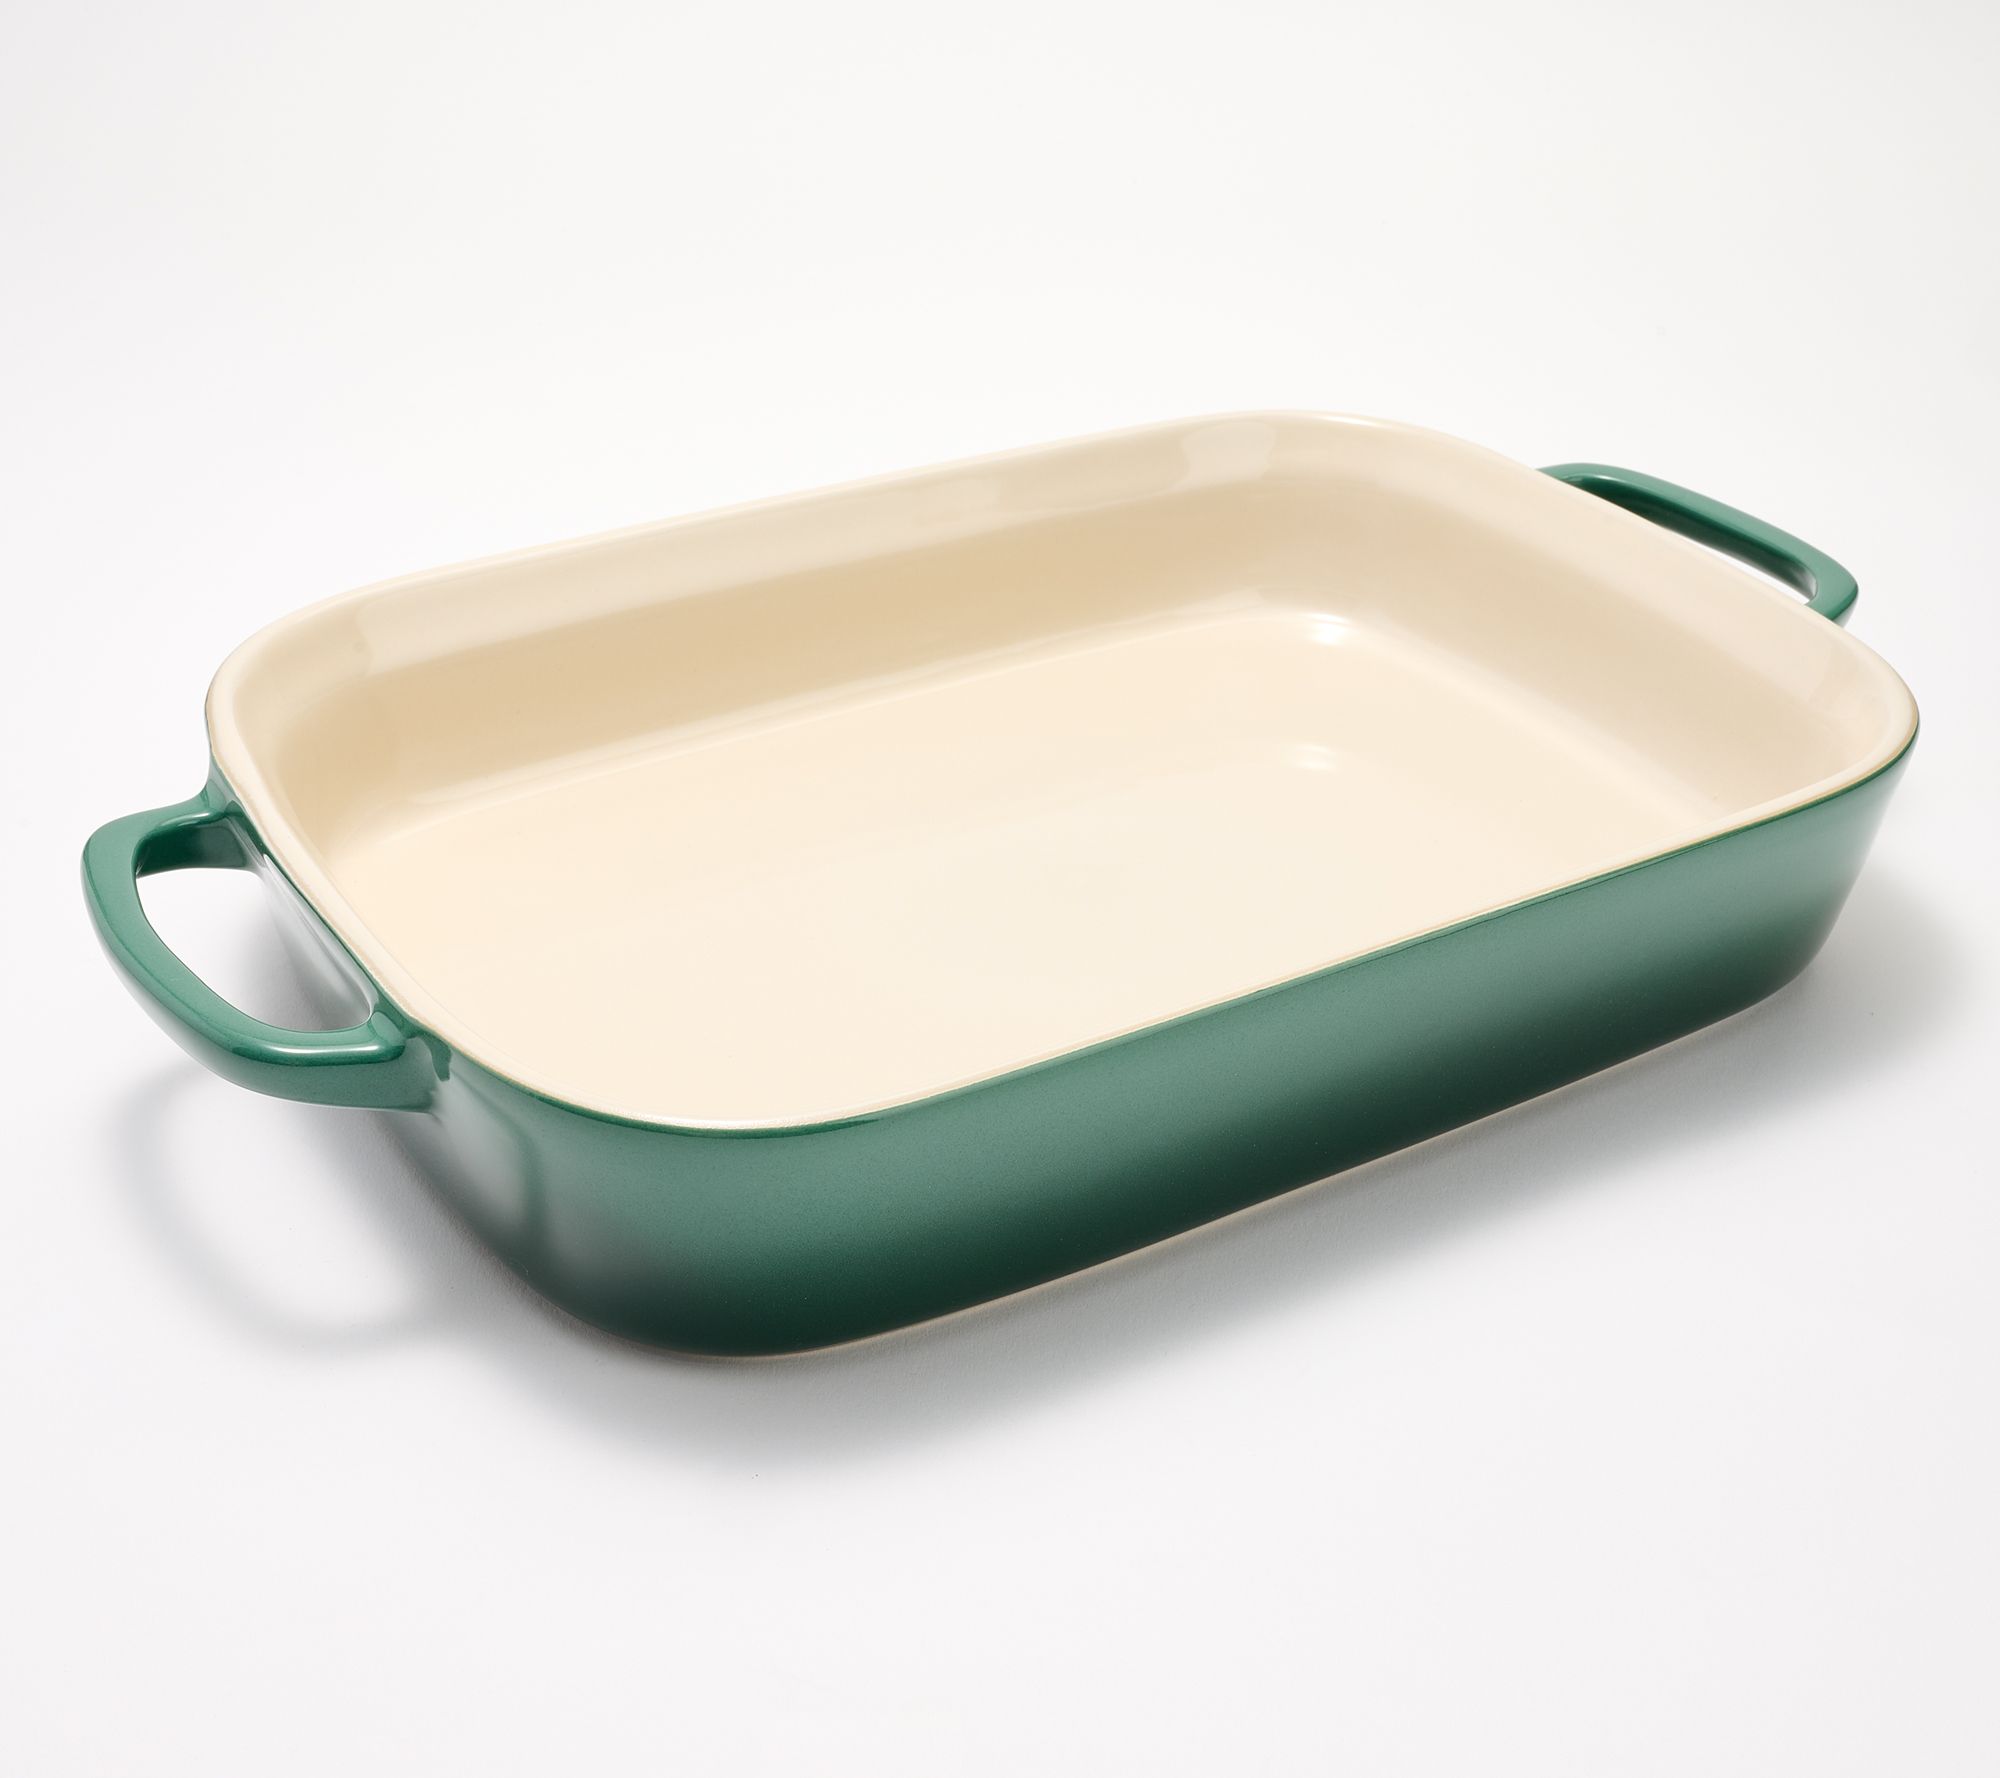 Le Creuset Stoneware Rectangular Baking Pan with Platter Lid